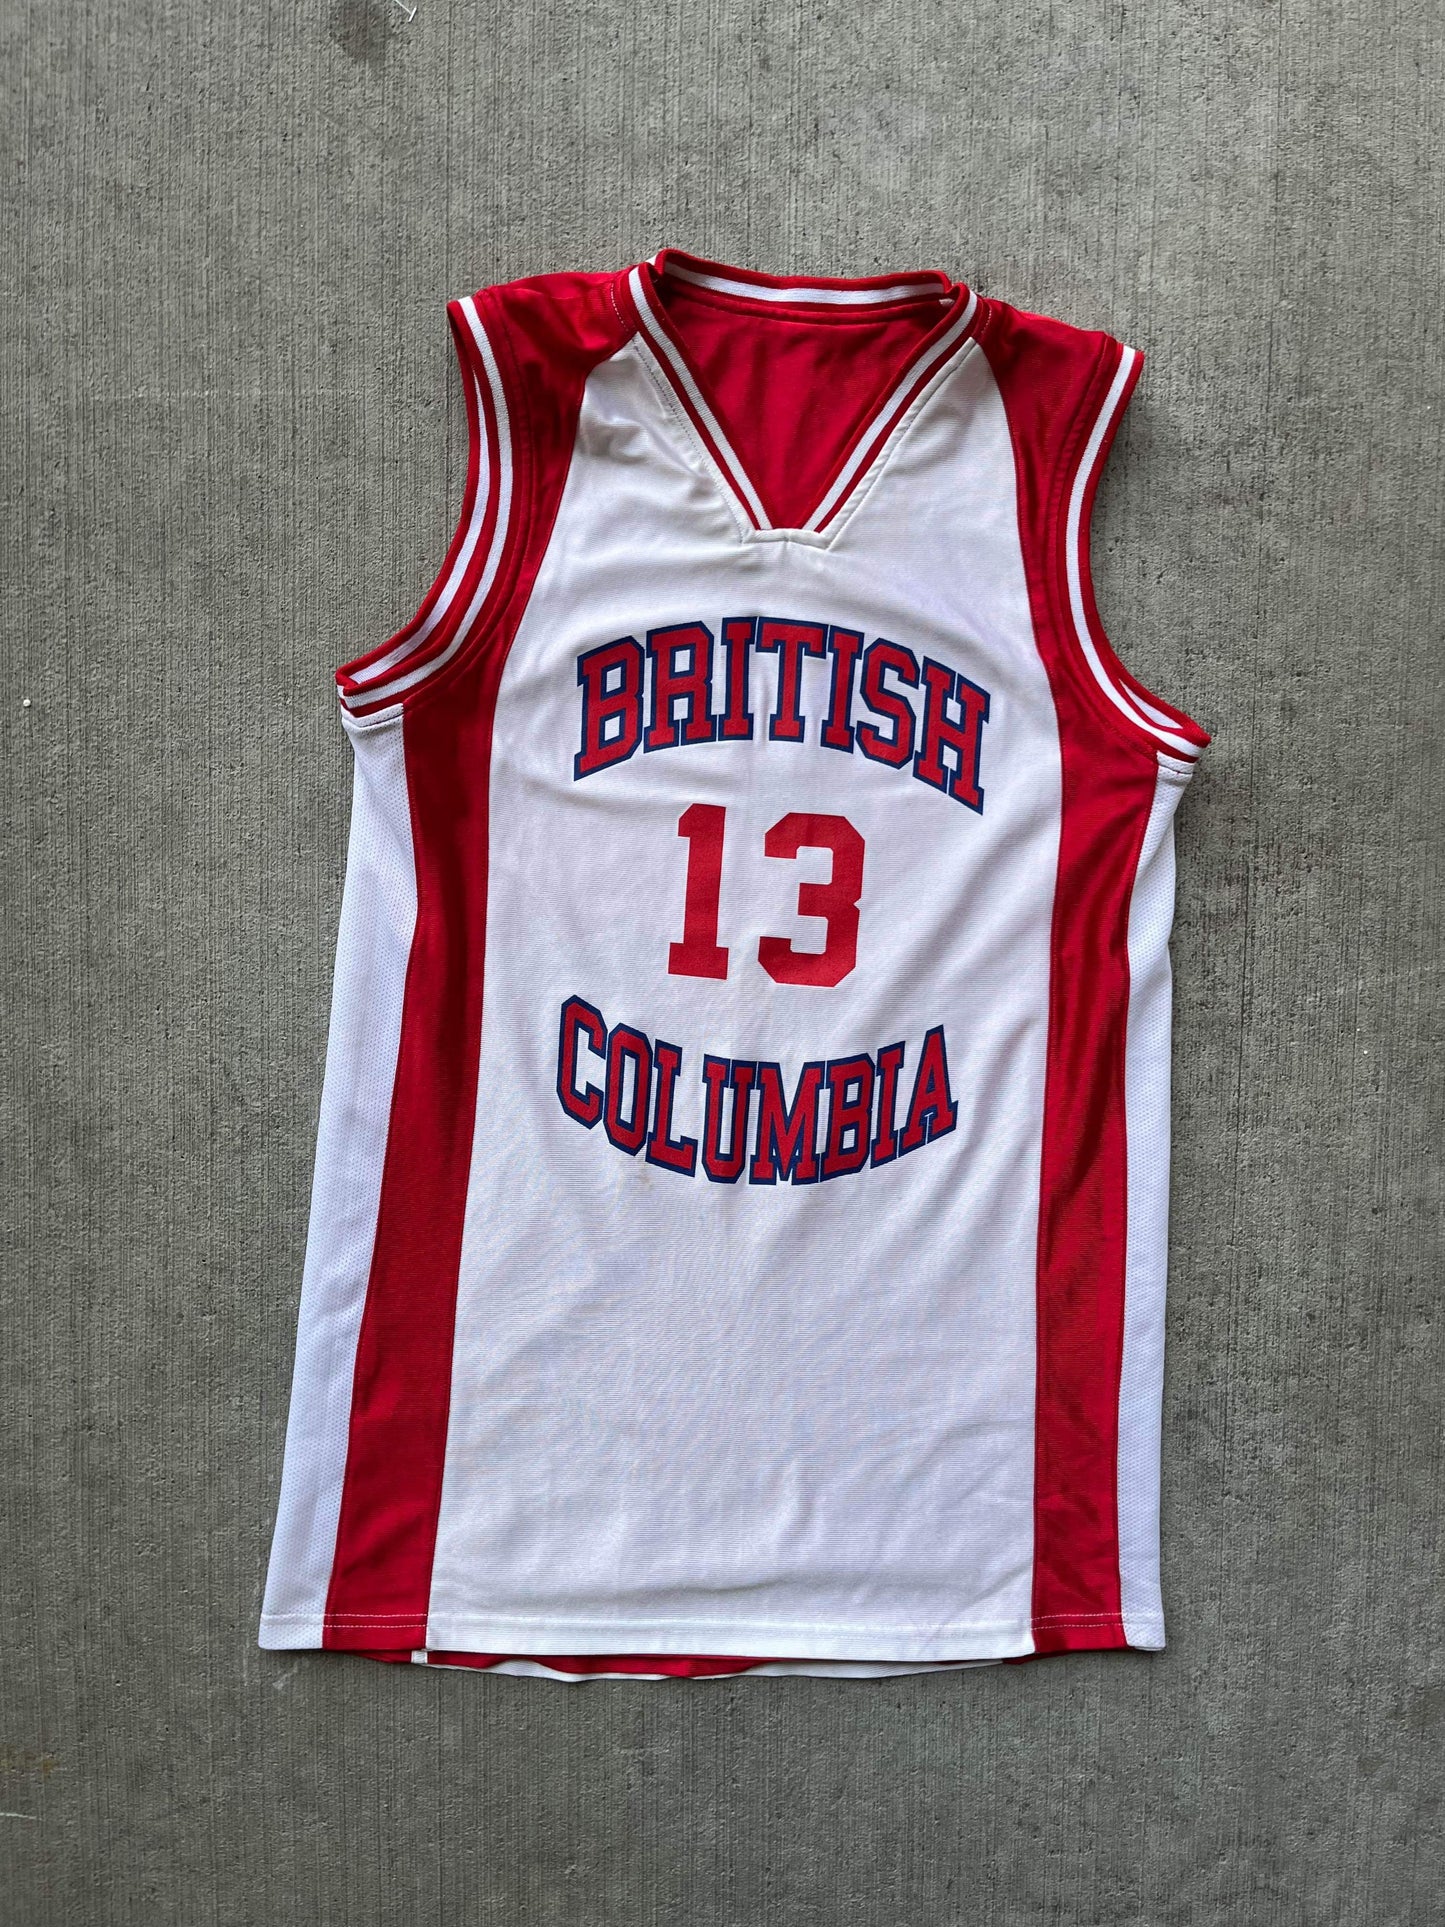 (M/L) Vintage Reversible BC Basketball Jersey